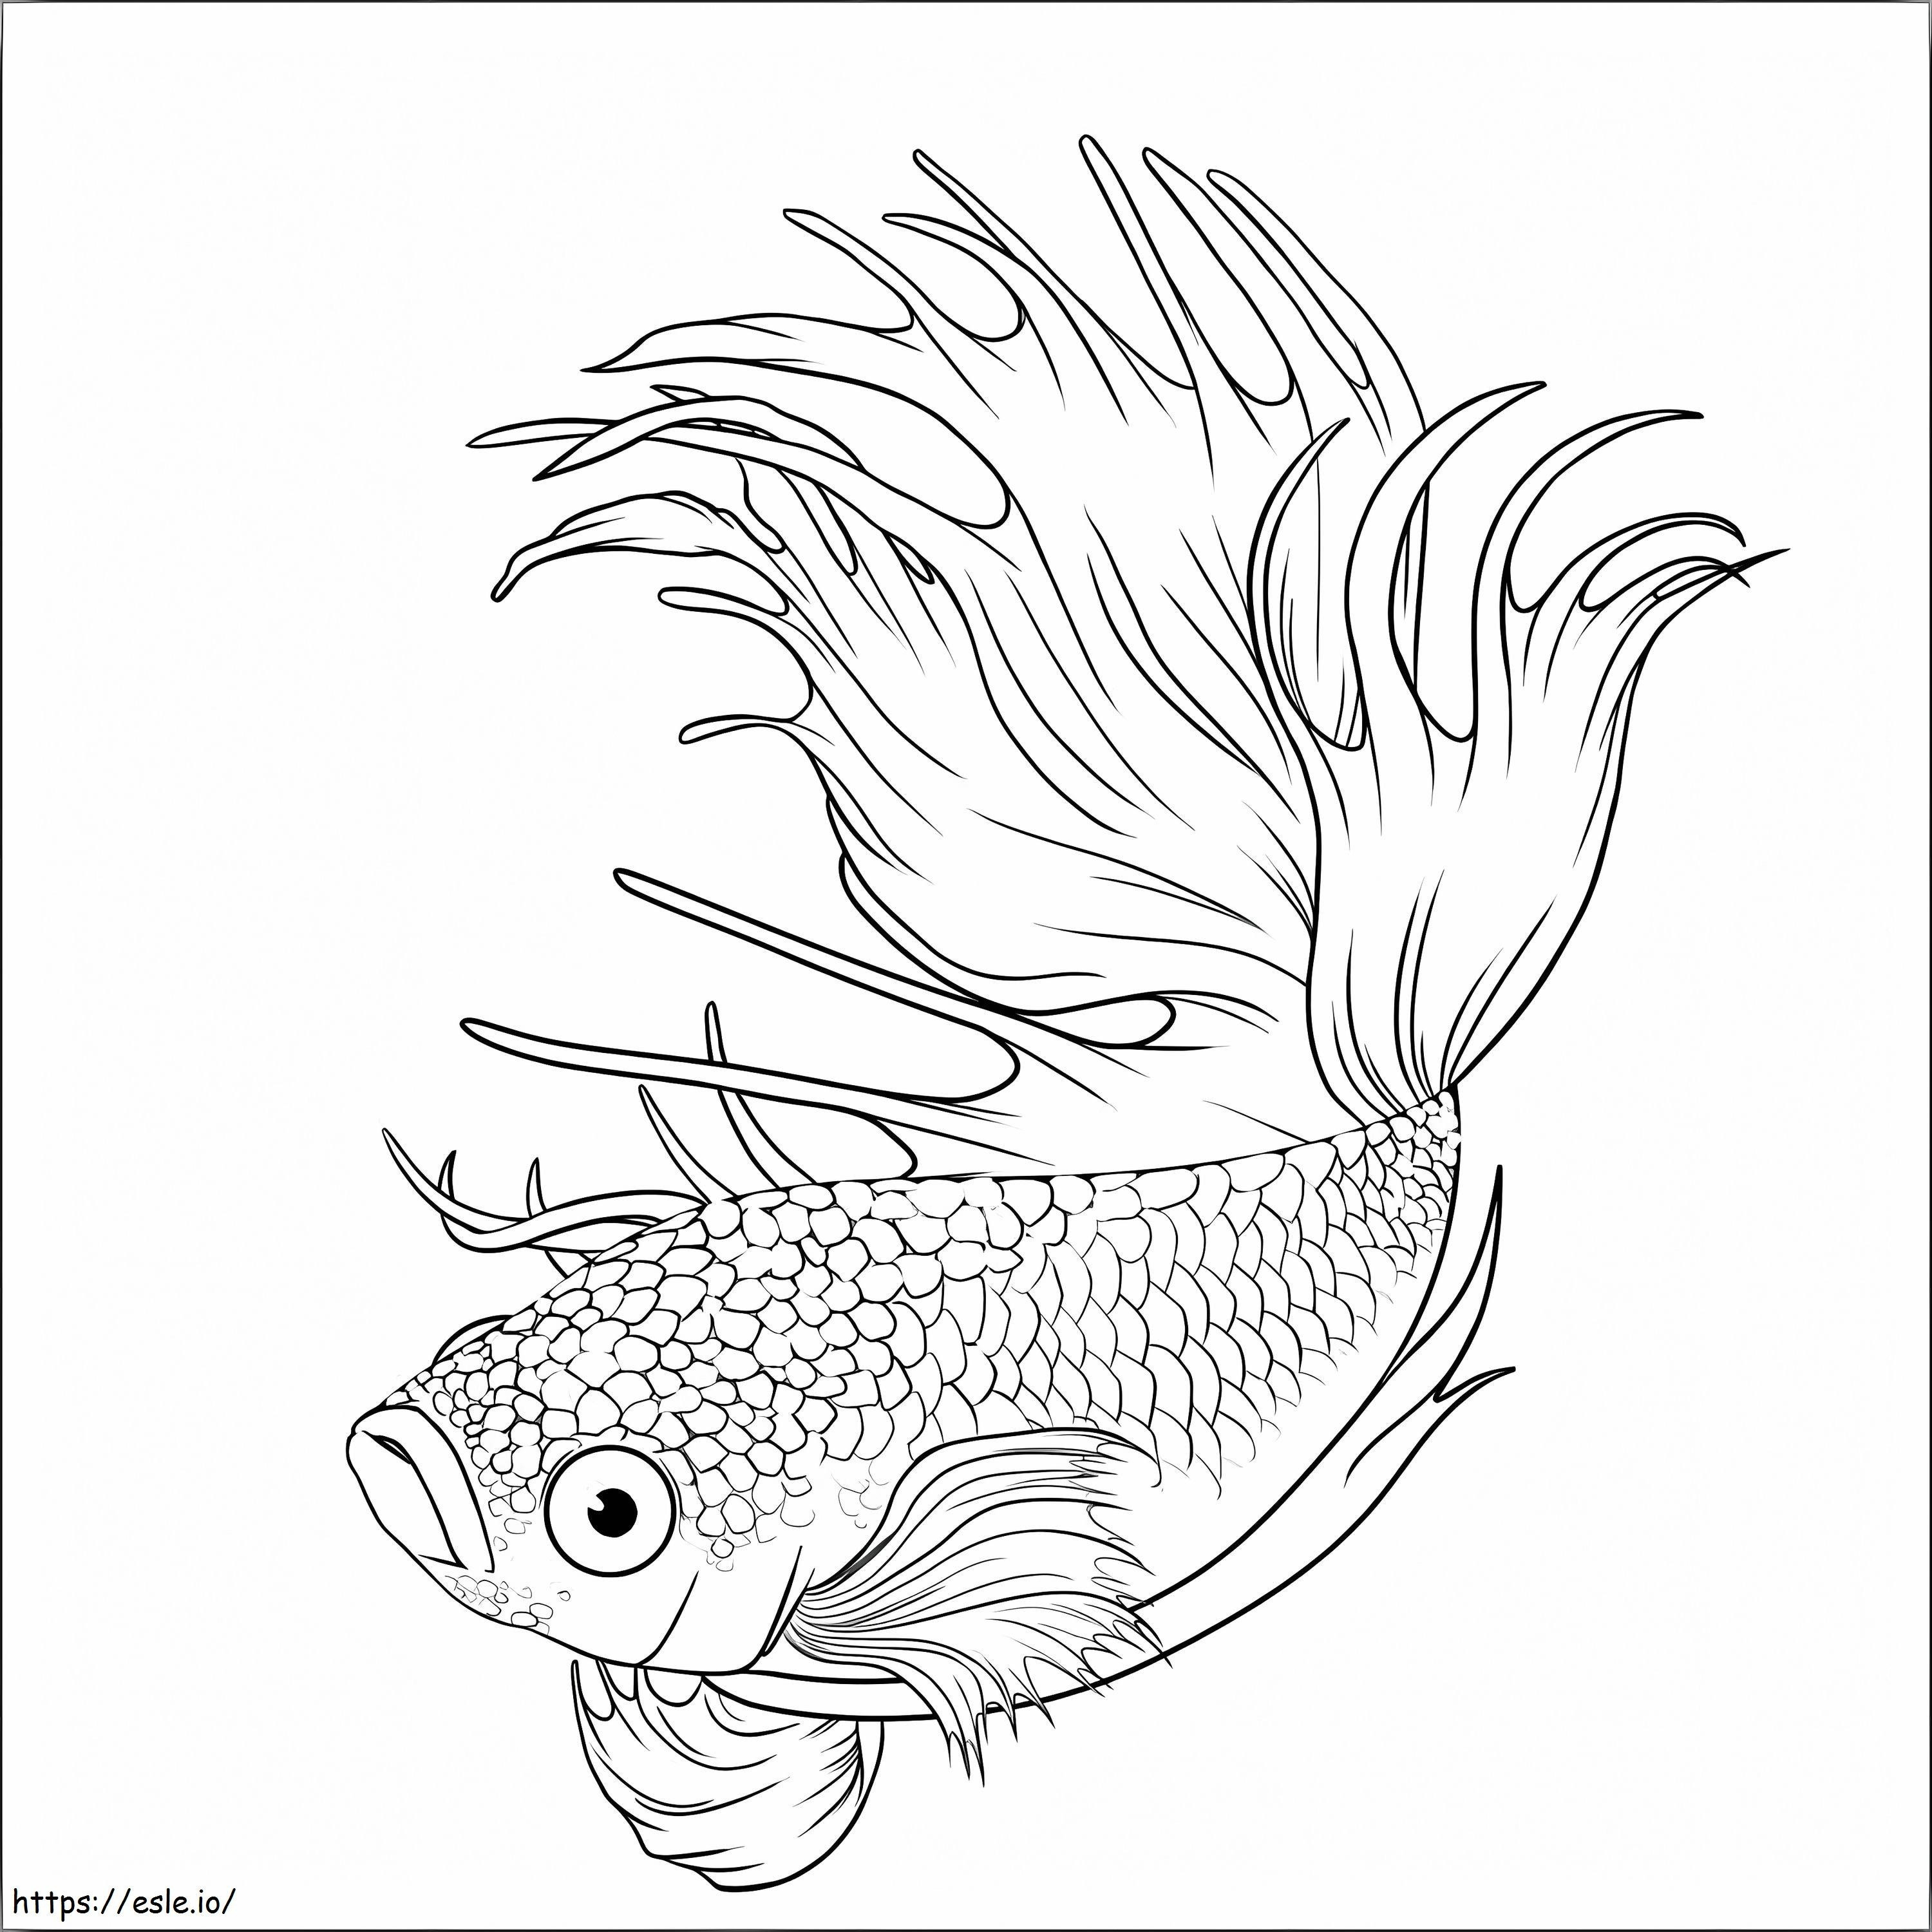 Darmowa ryba kolorowanka